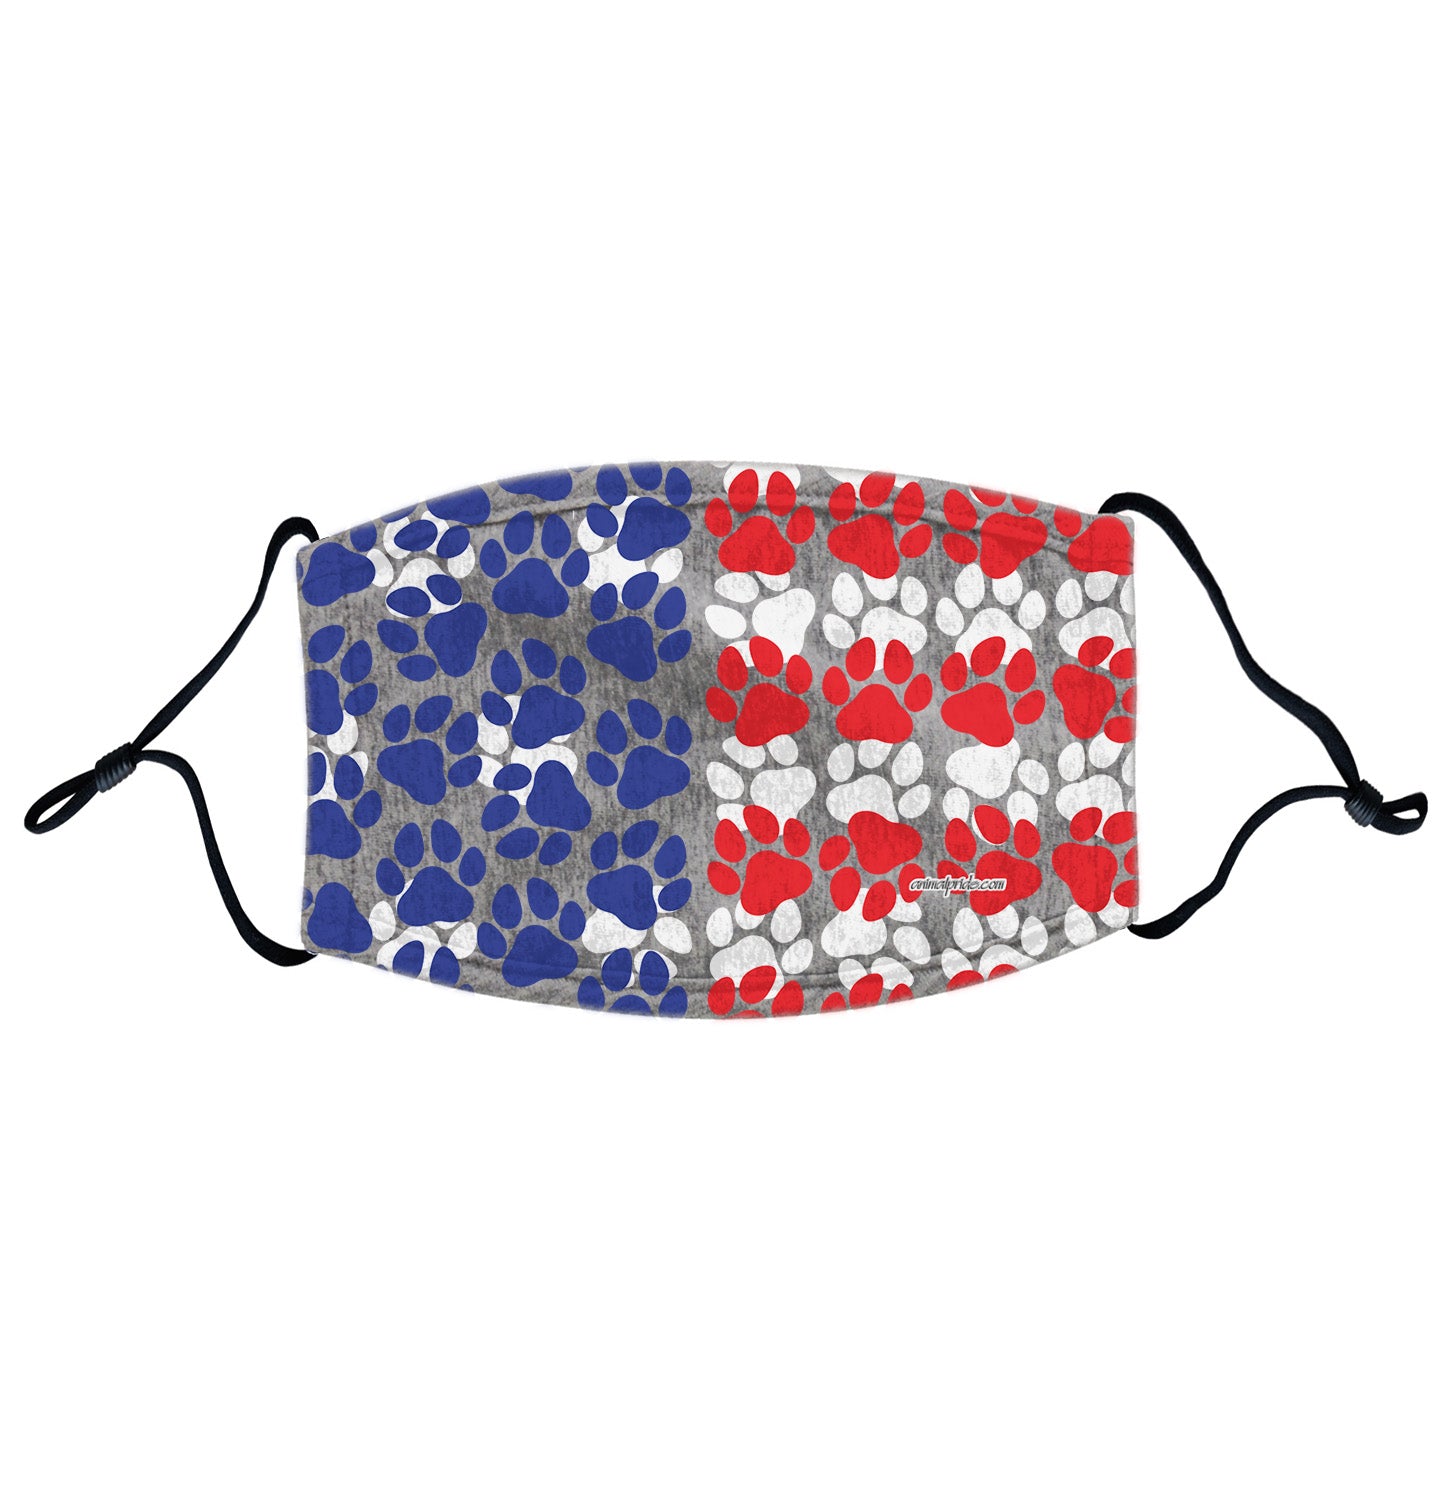 USA Flag - Paw Prints - Adjustable Face Mask, Breathable, Reusable, Printed in USA